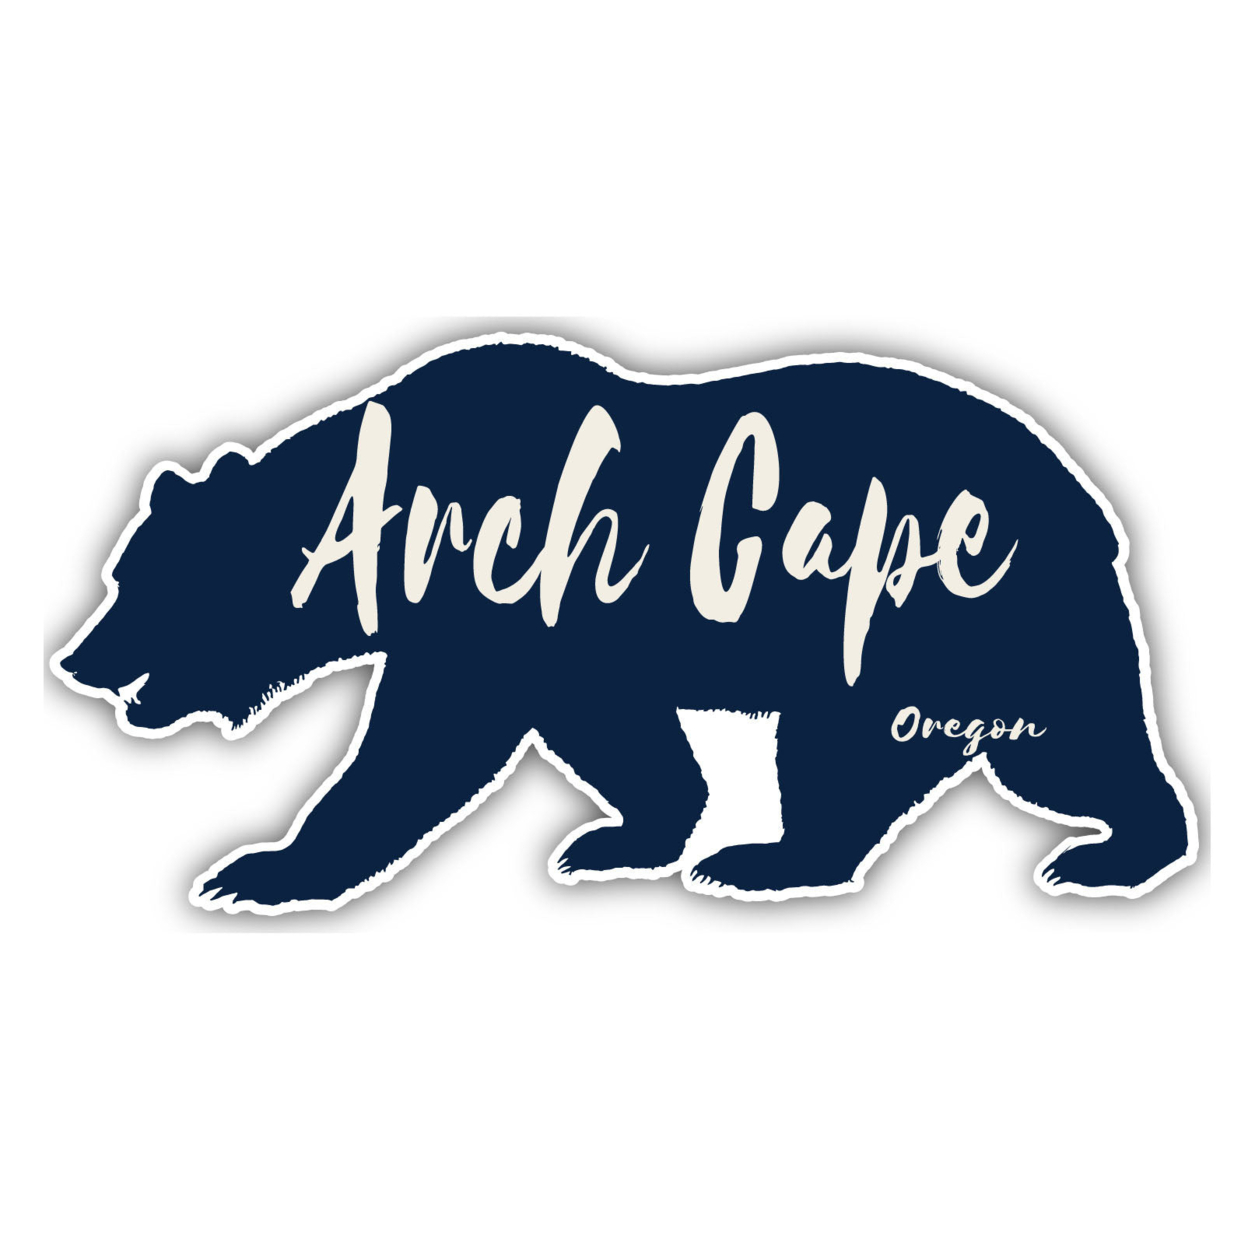 Arch Cape Oregon Souvenir Decorative Stickers (Choose Theme And Size) - 4-Pack, 2-Inch, Bear